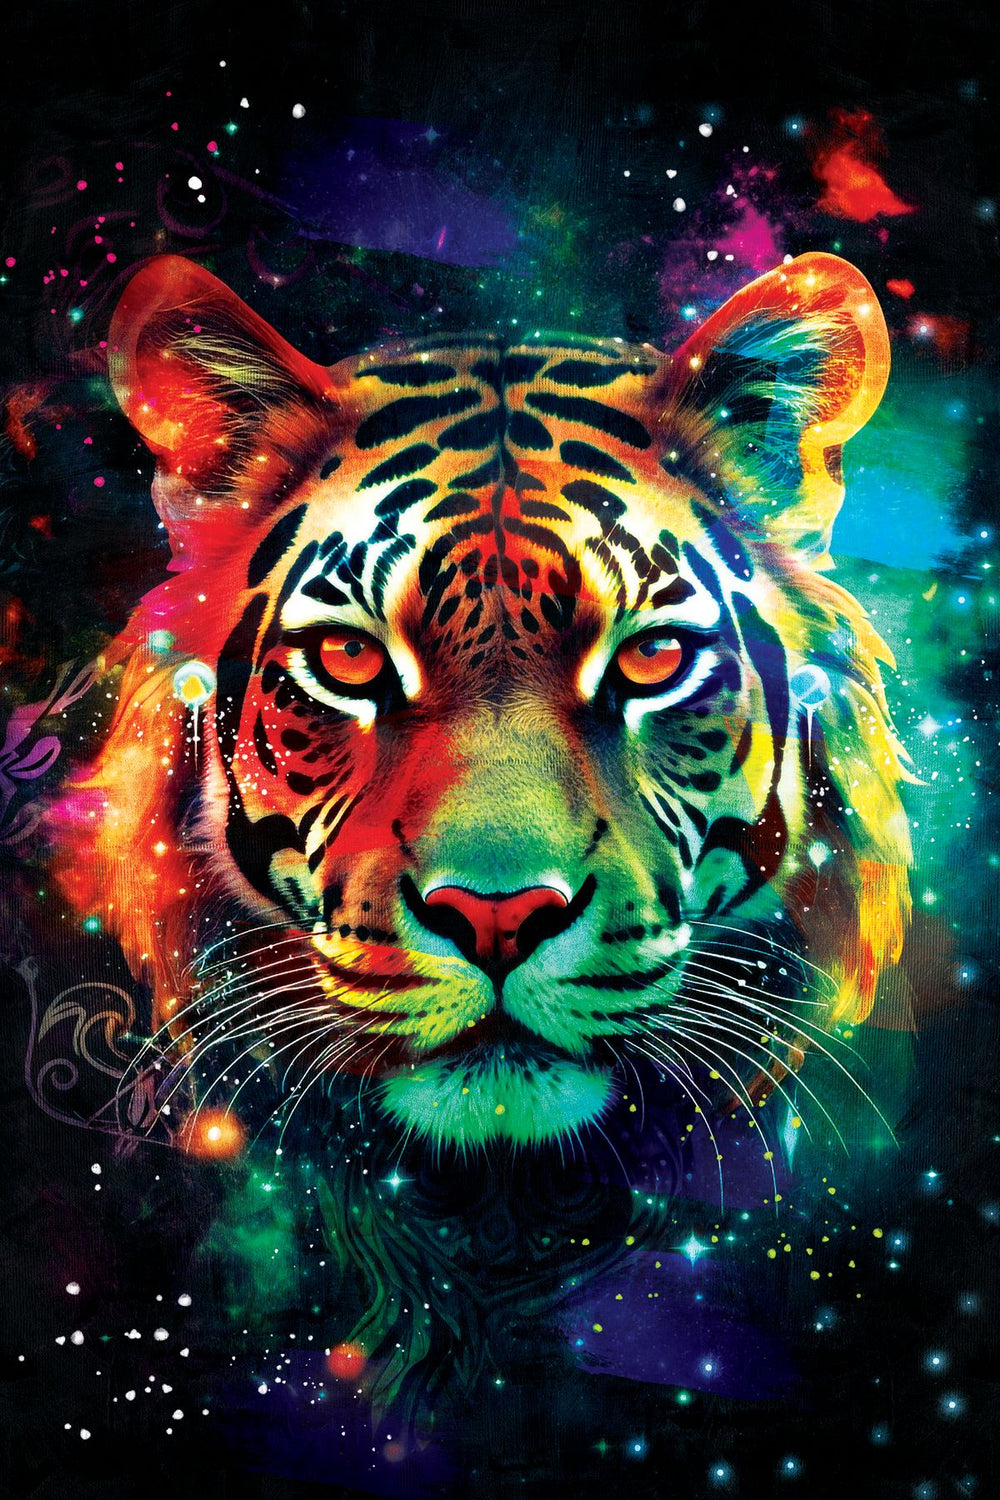 Cosmic Tiger IV